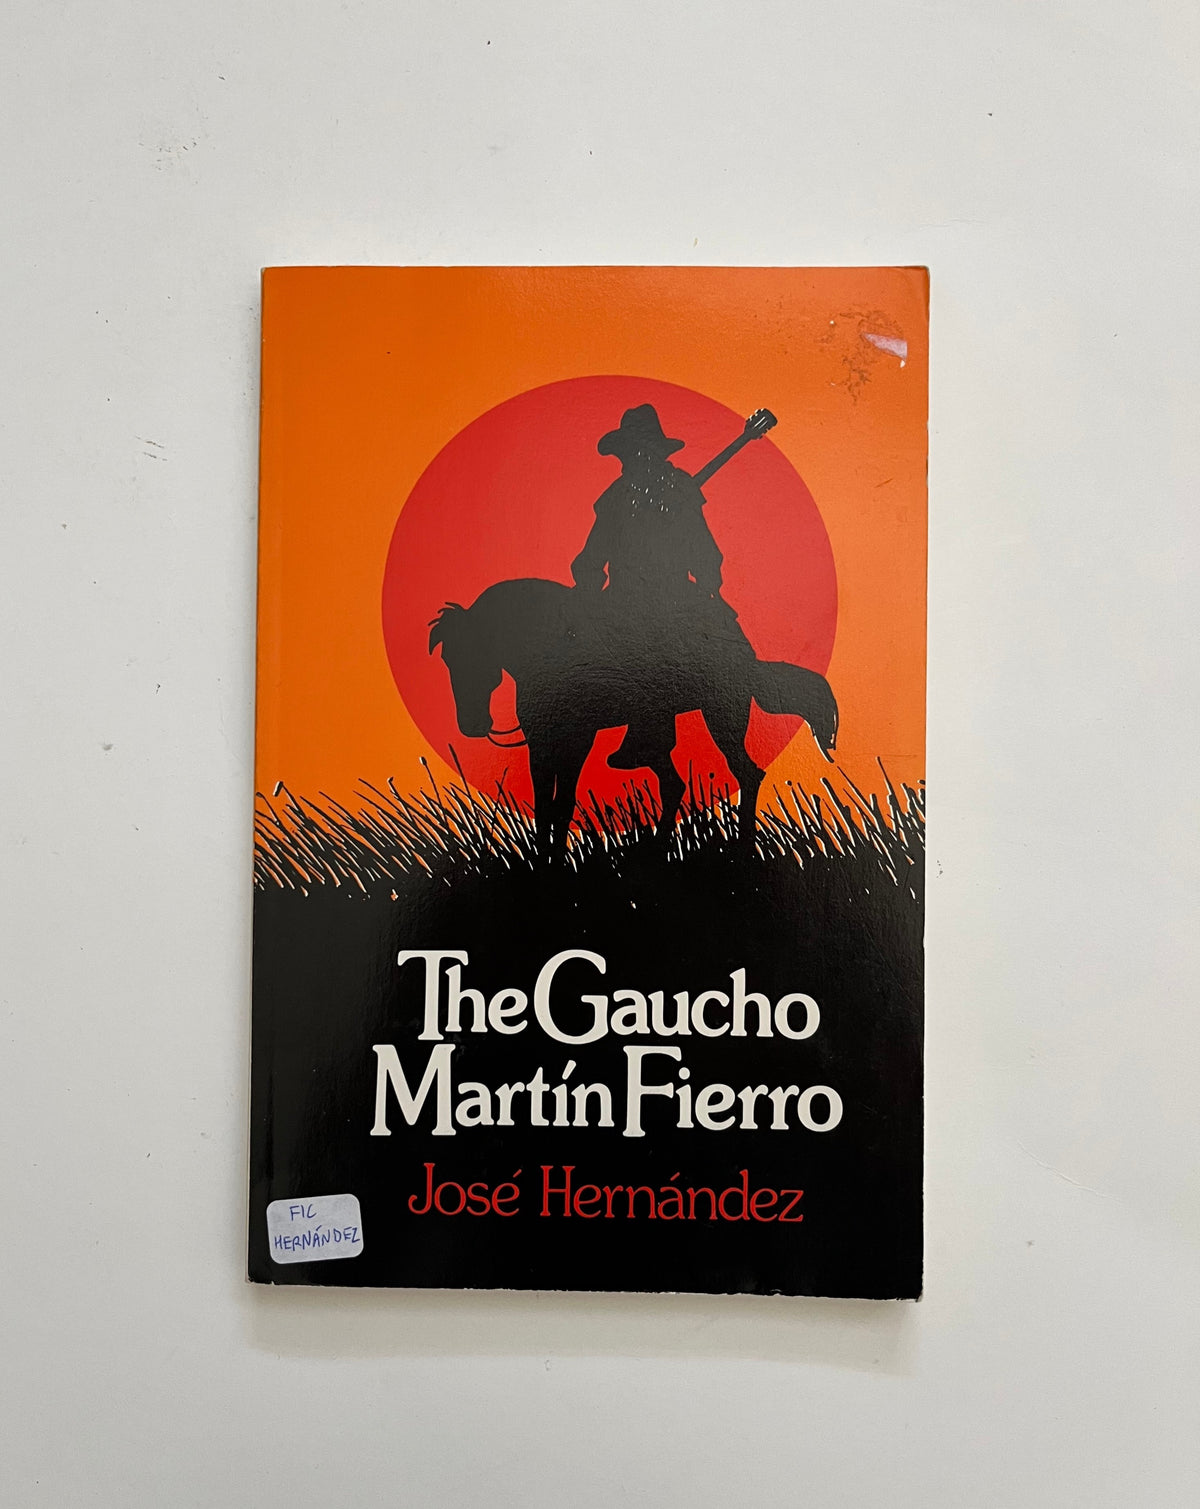 The Gaucho Martin Fierro by Jose Hernandez